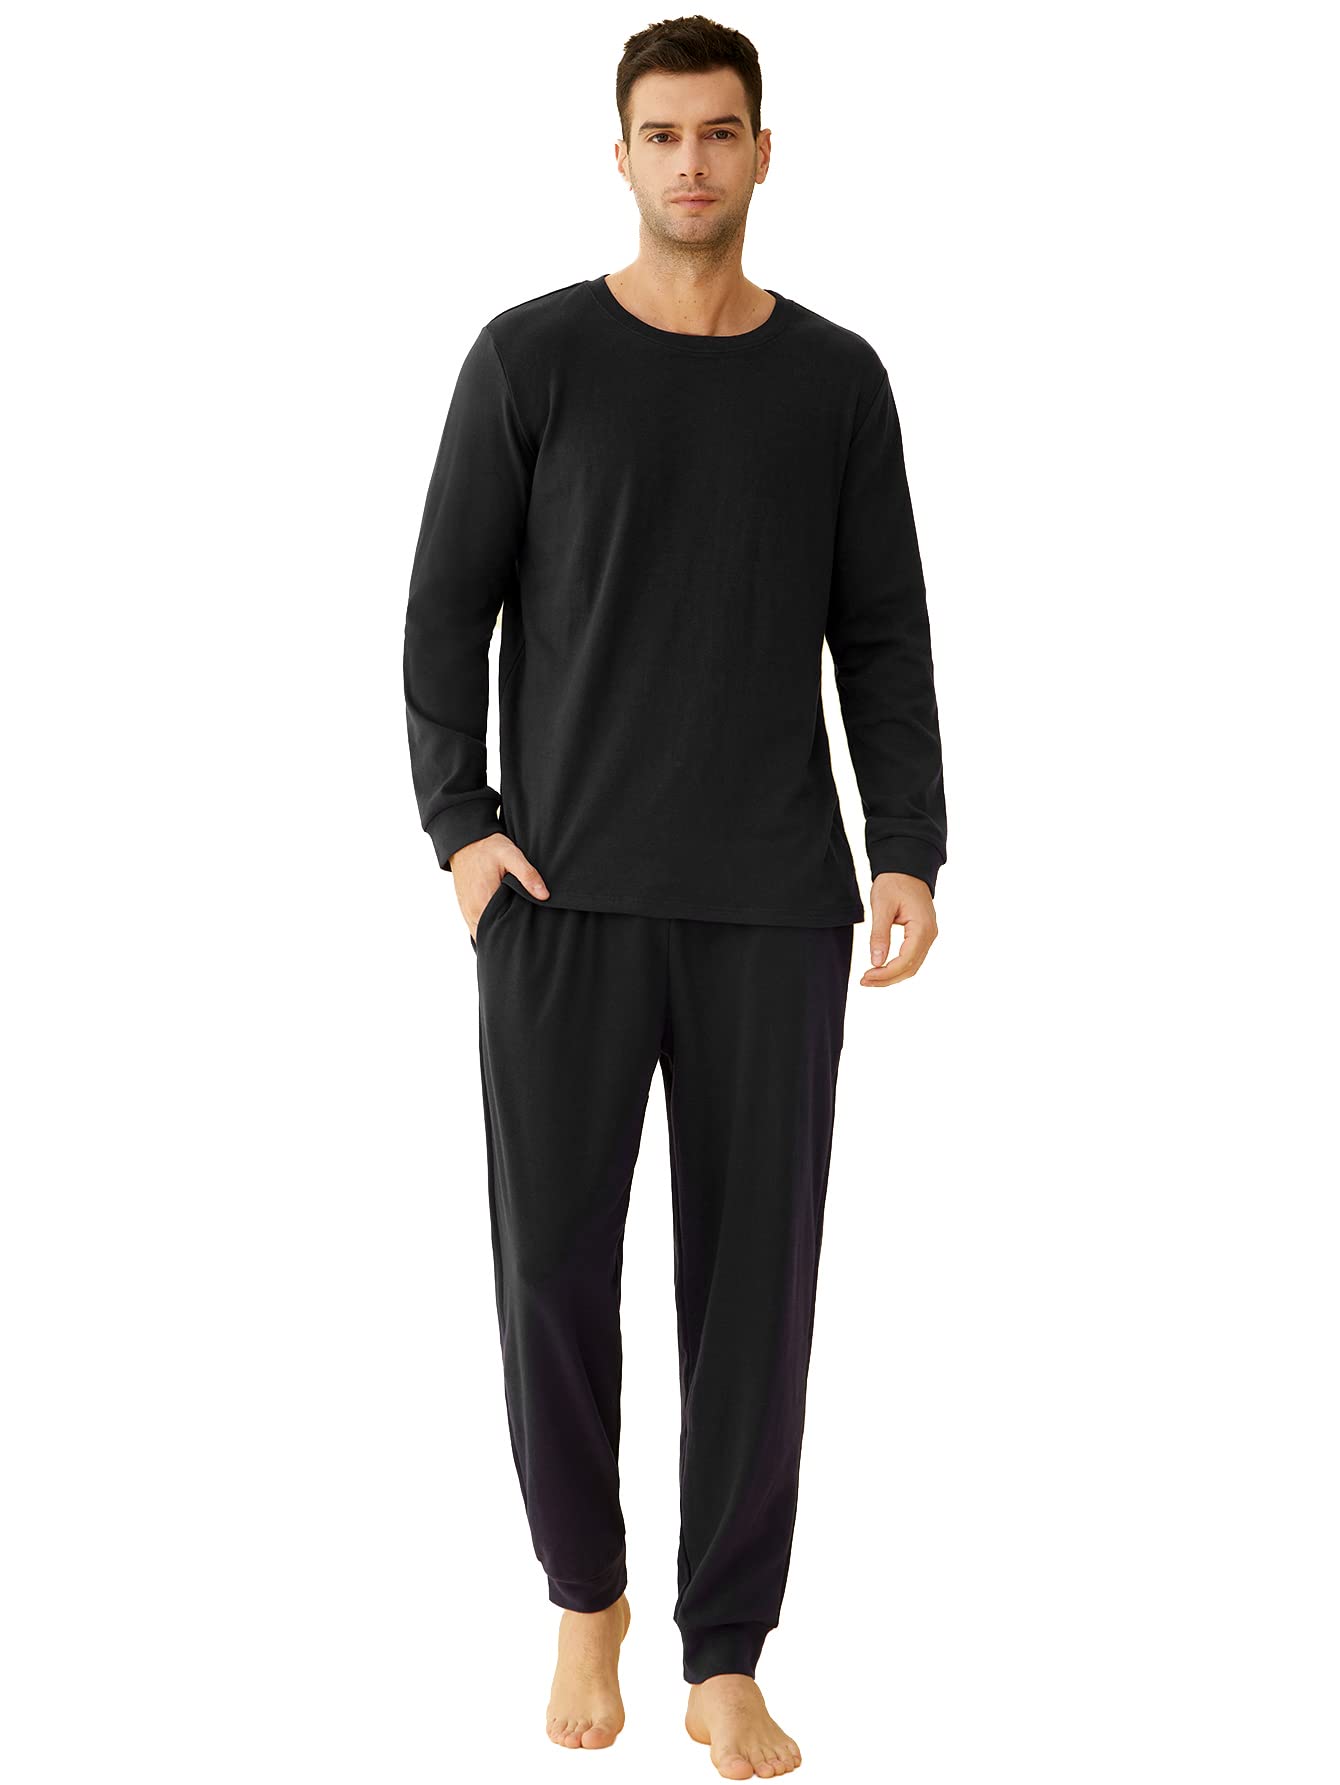 Black Men Nightwear Shirt Pants Sleep Pajamas Sets Long Sleeve